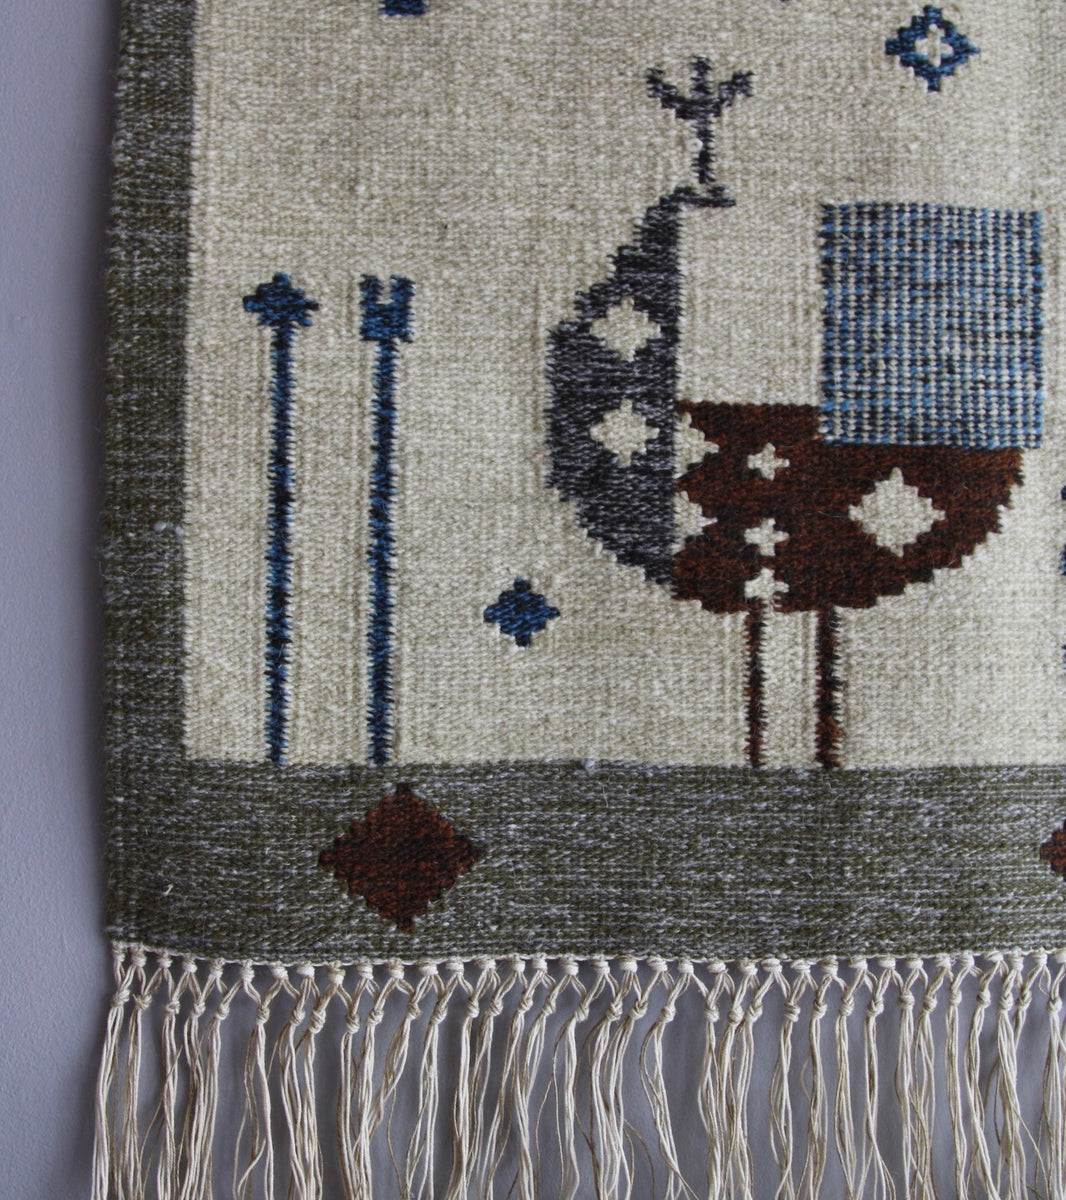 textiles swedish woman crafts skills scandinavian modern made by hand 